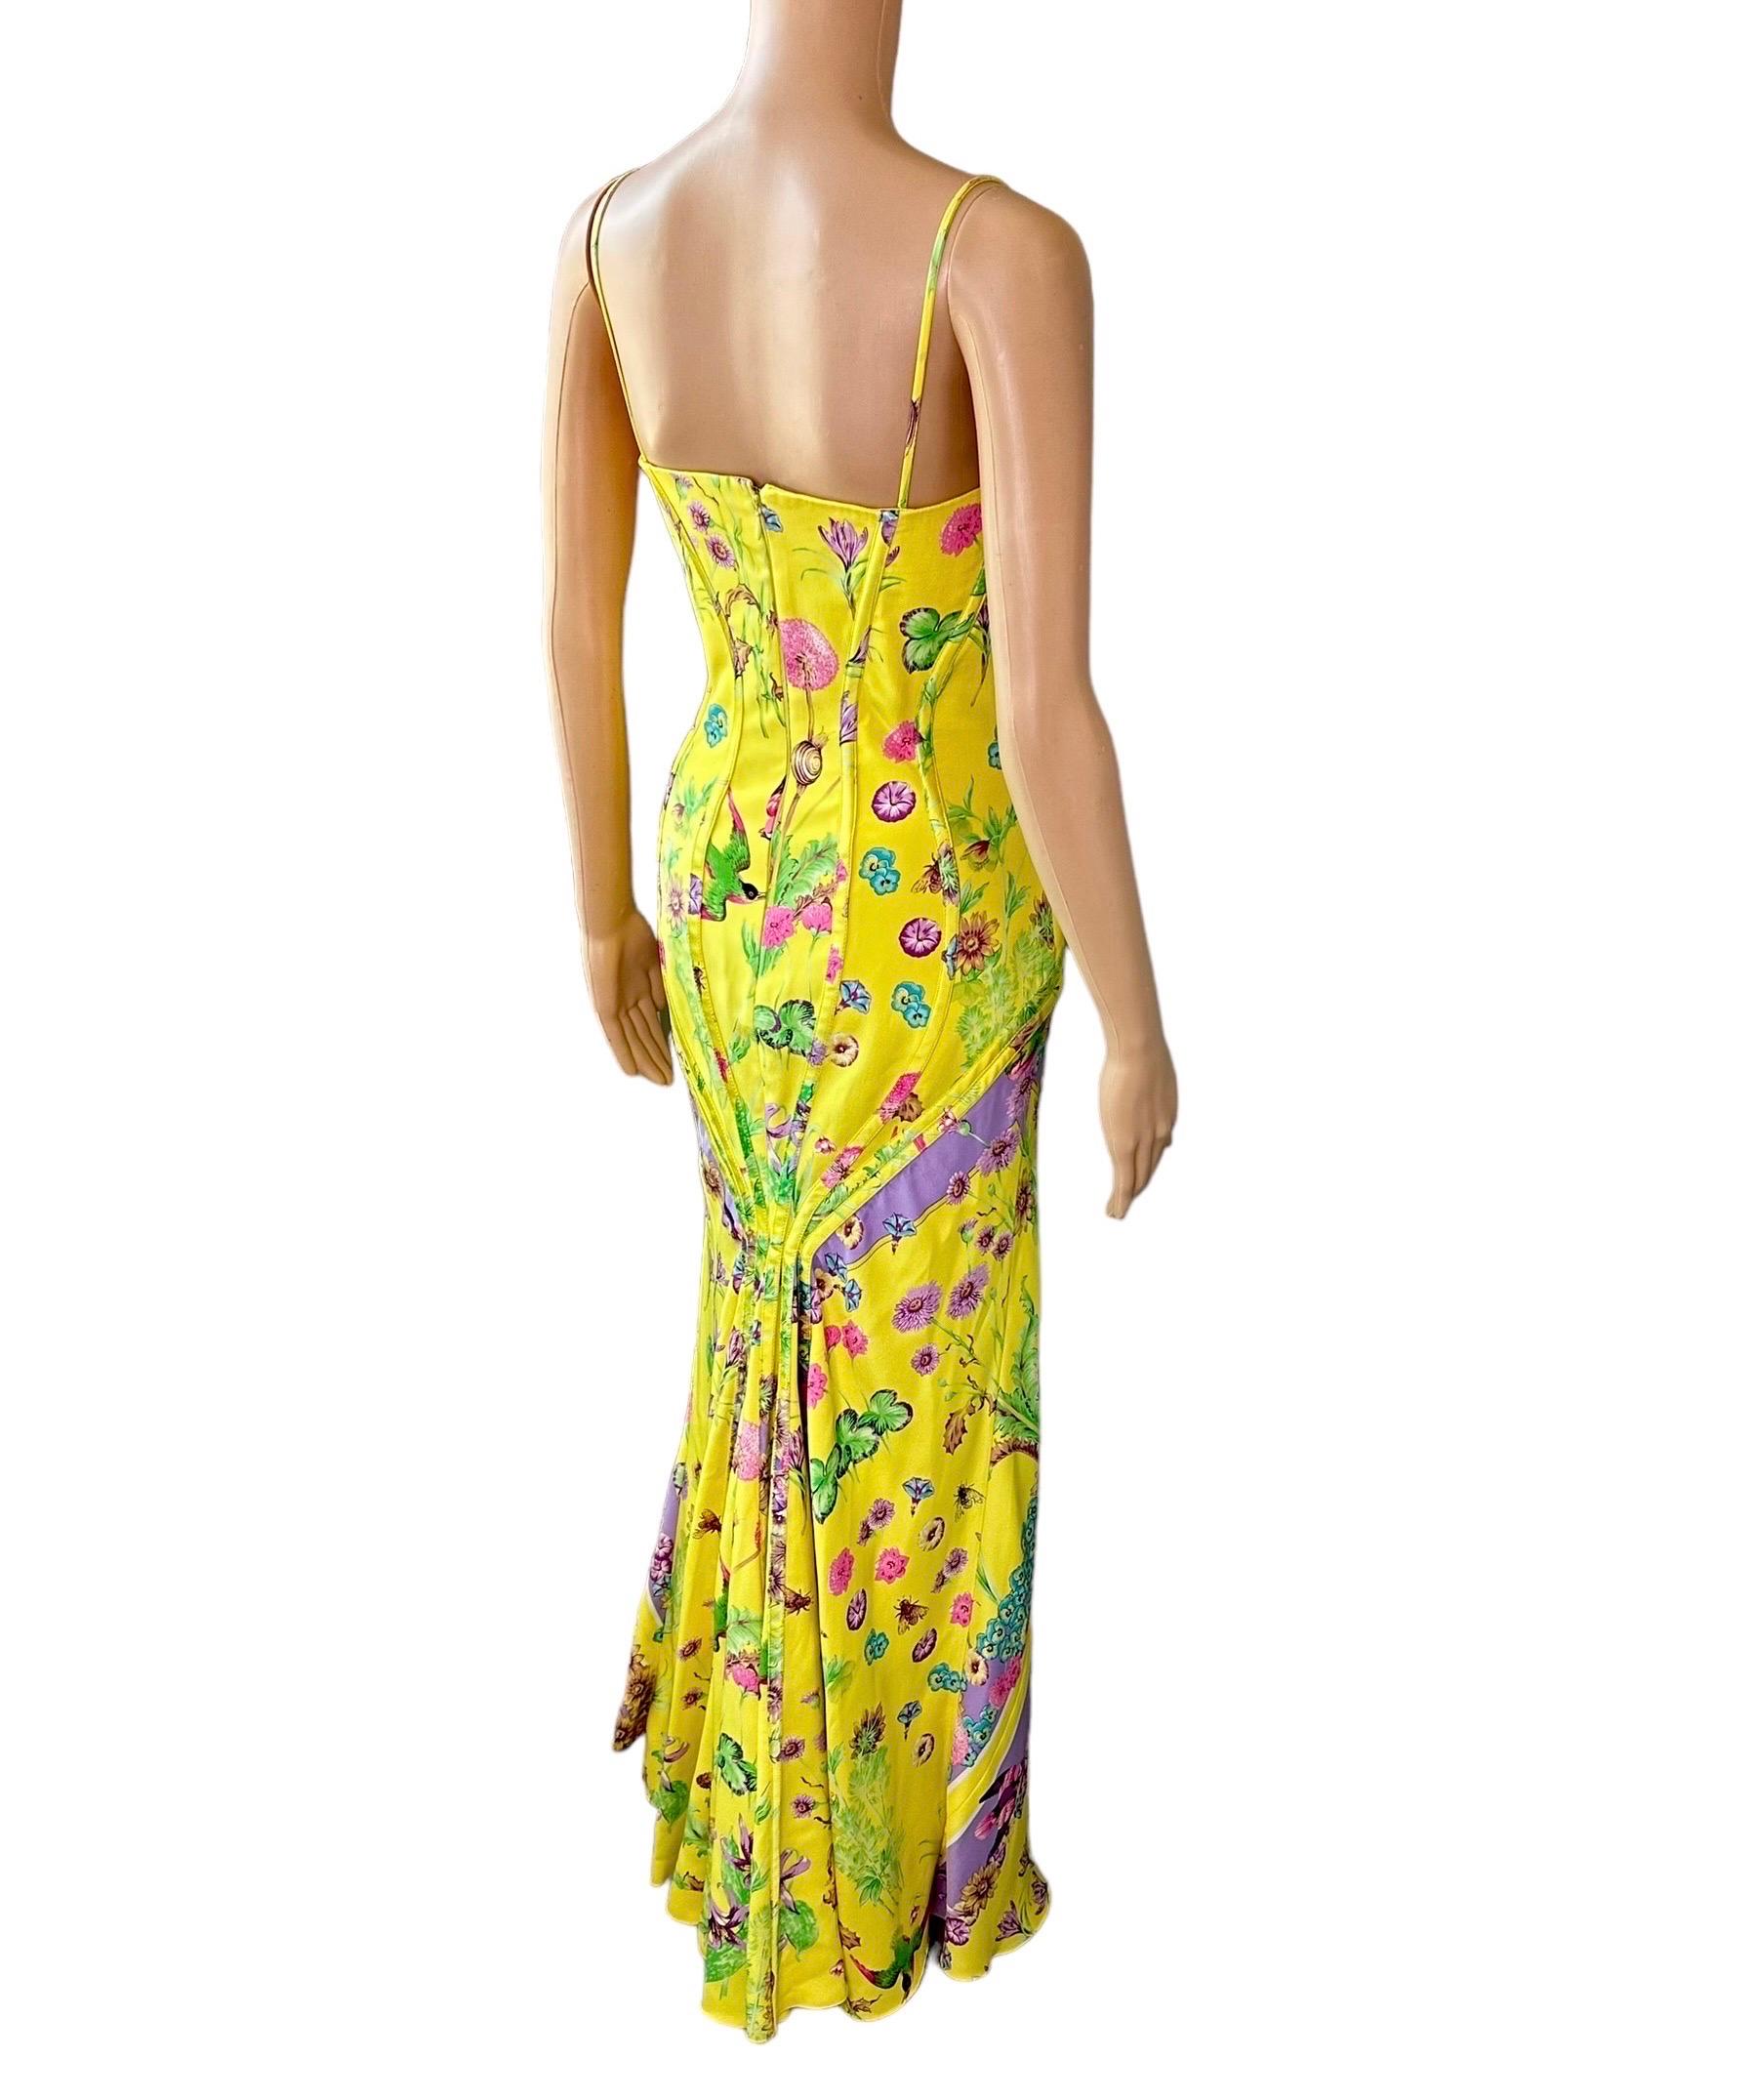 Versace S/S 2006 Bustier Corset Floral Print Evening Dress Gown For Sale 8